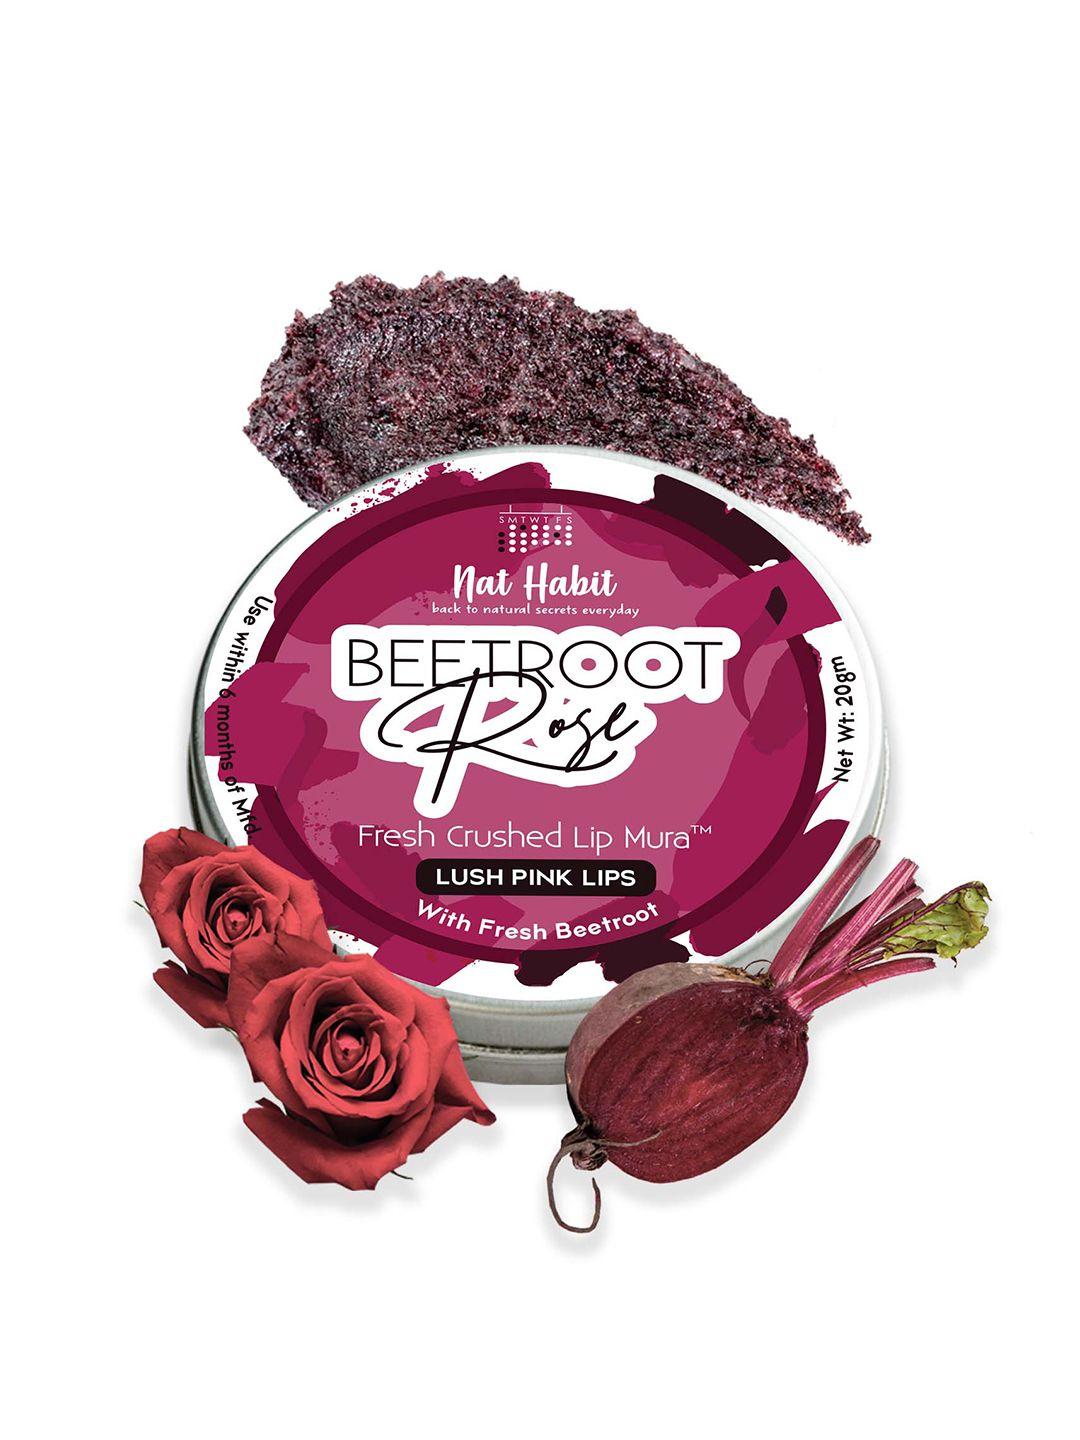 nat habit beetroot rose fresh crushed lip mura for lush pink lips - 20g